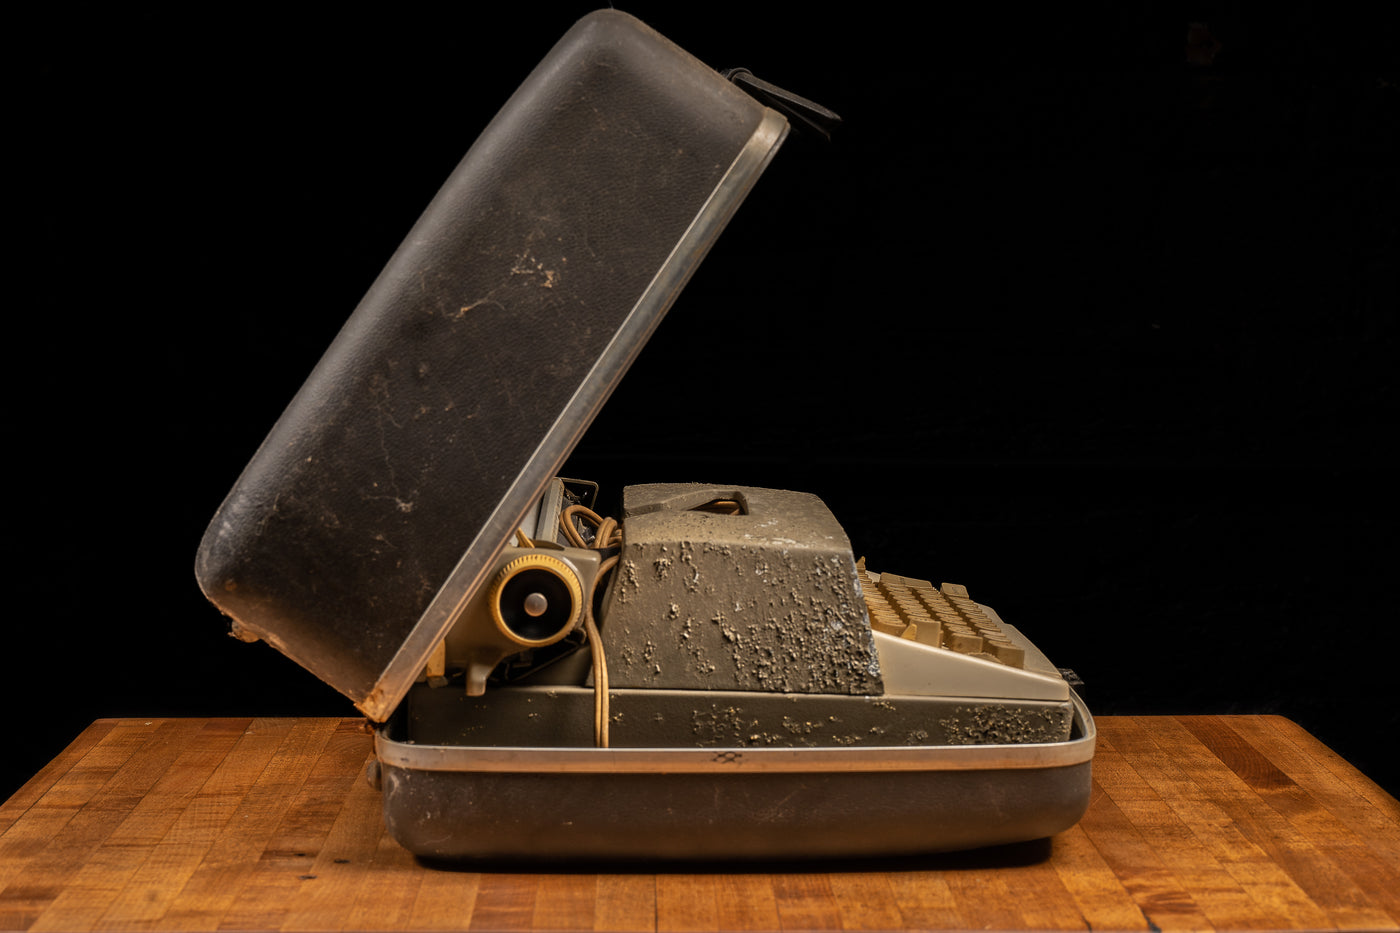 c. 1970s Smith-Corona Portable Typewriter in Case